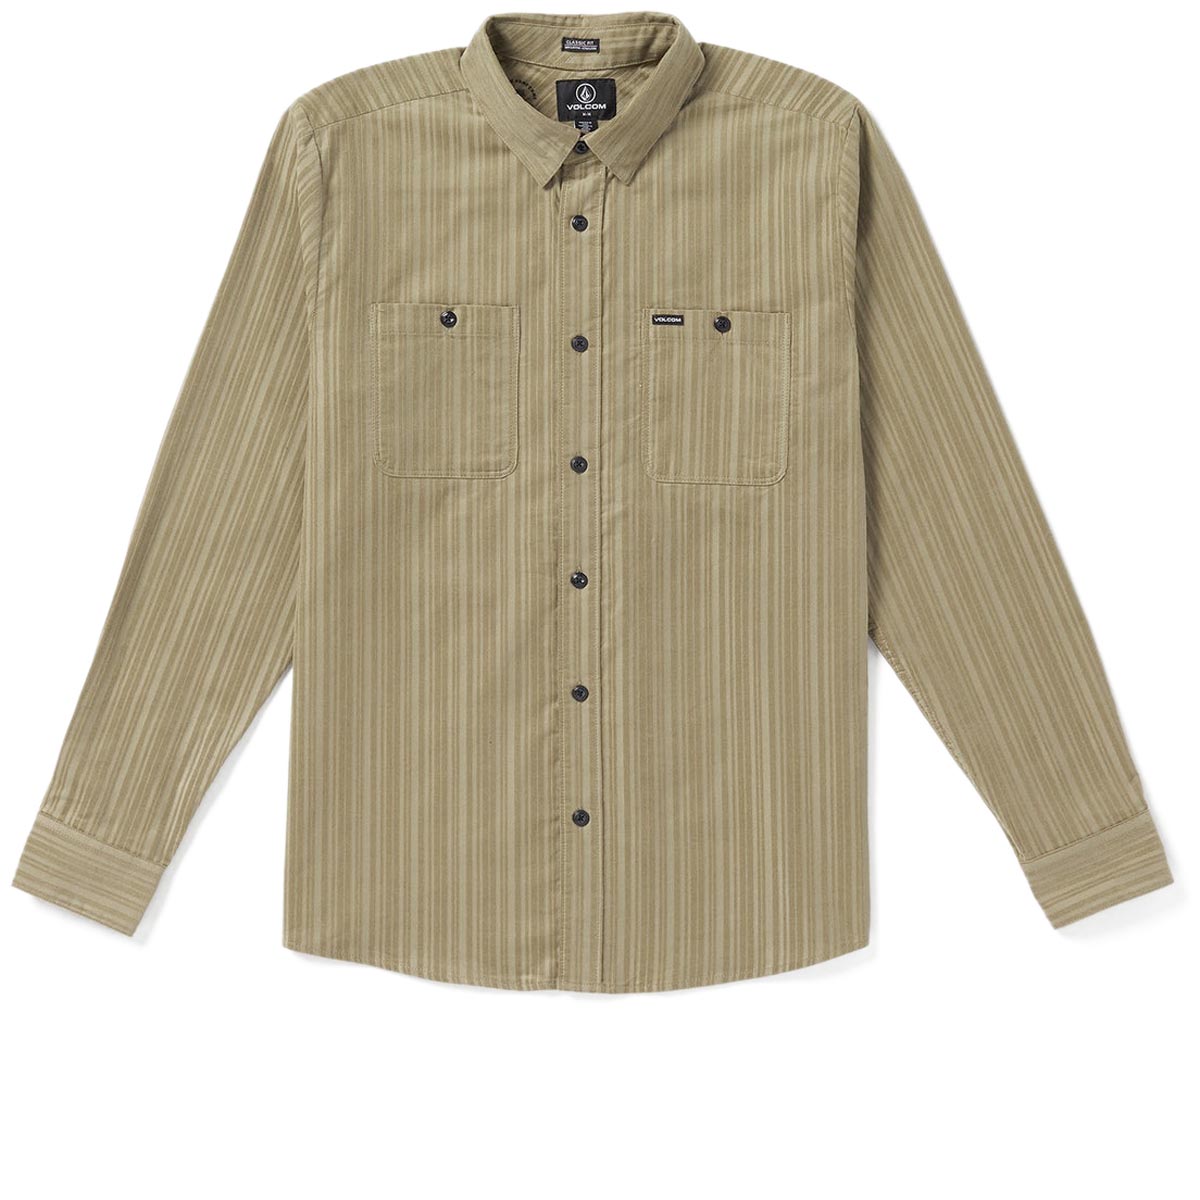 Volcom V Ent Fat Tony Woven Long Sleeve Shirt - Khaki image 2